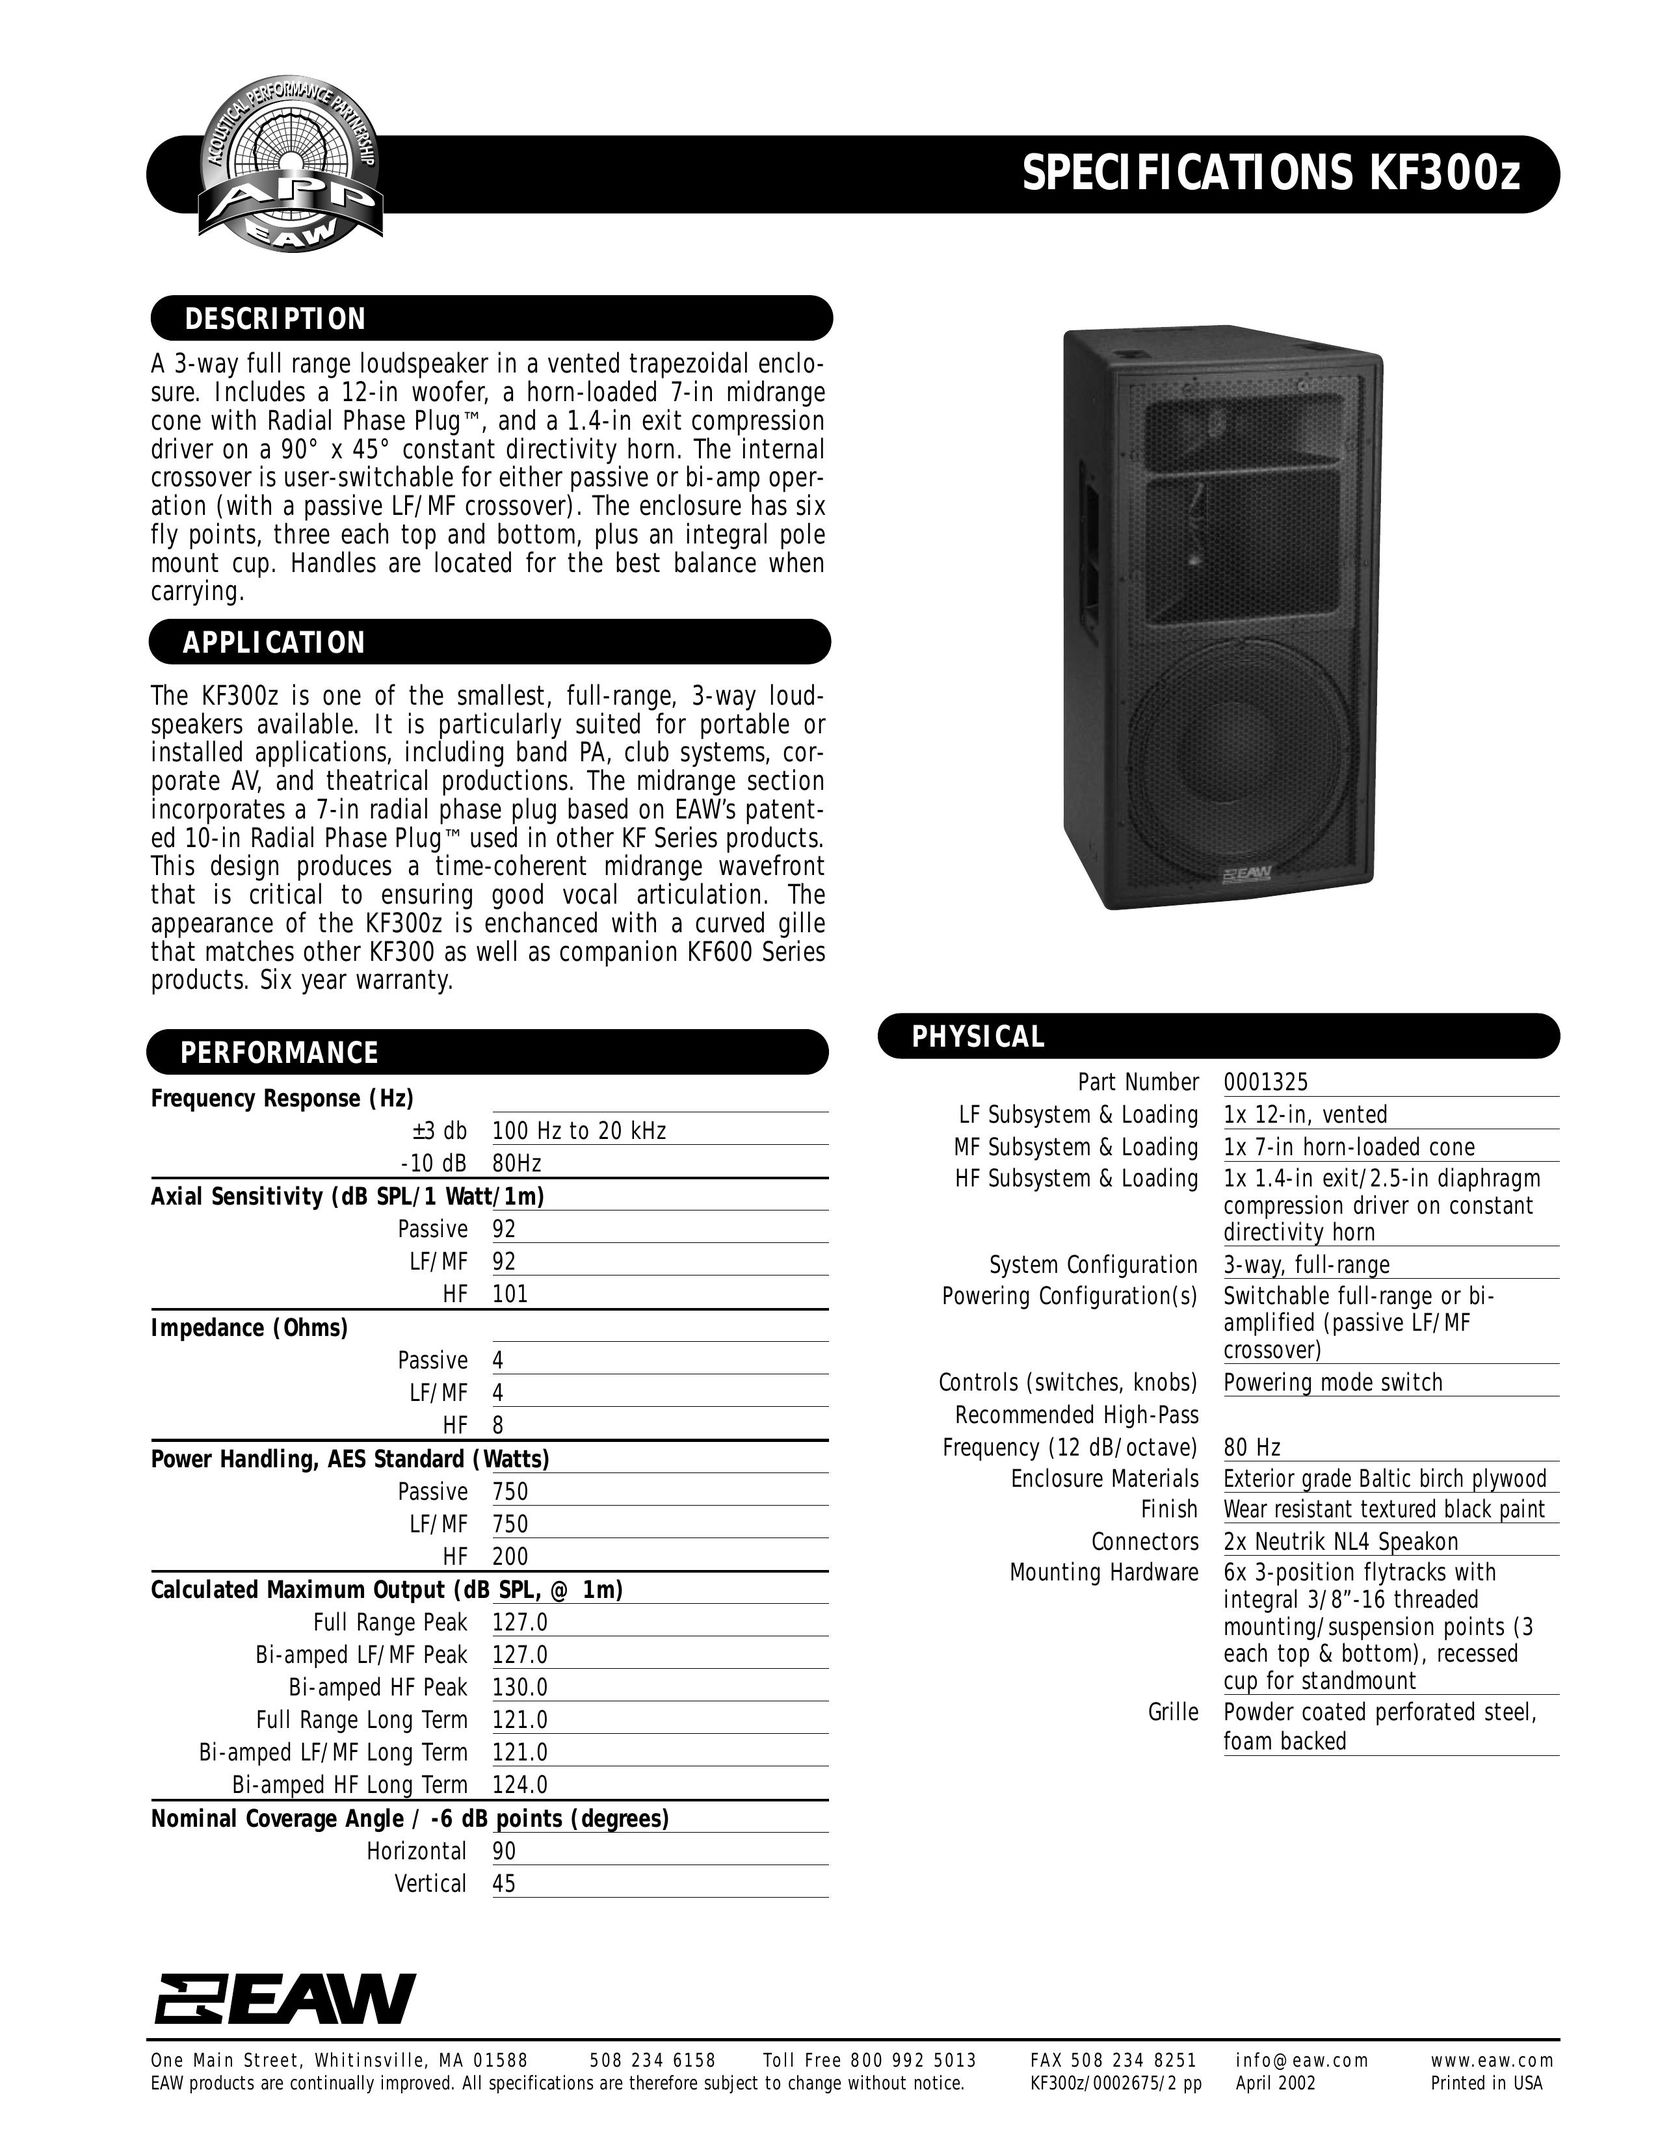 EAW KF300z Speaker User Manual